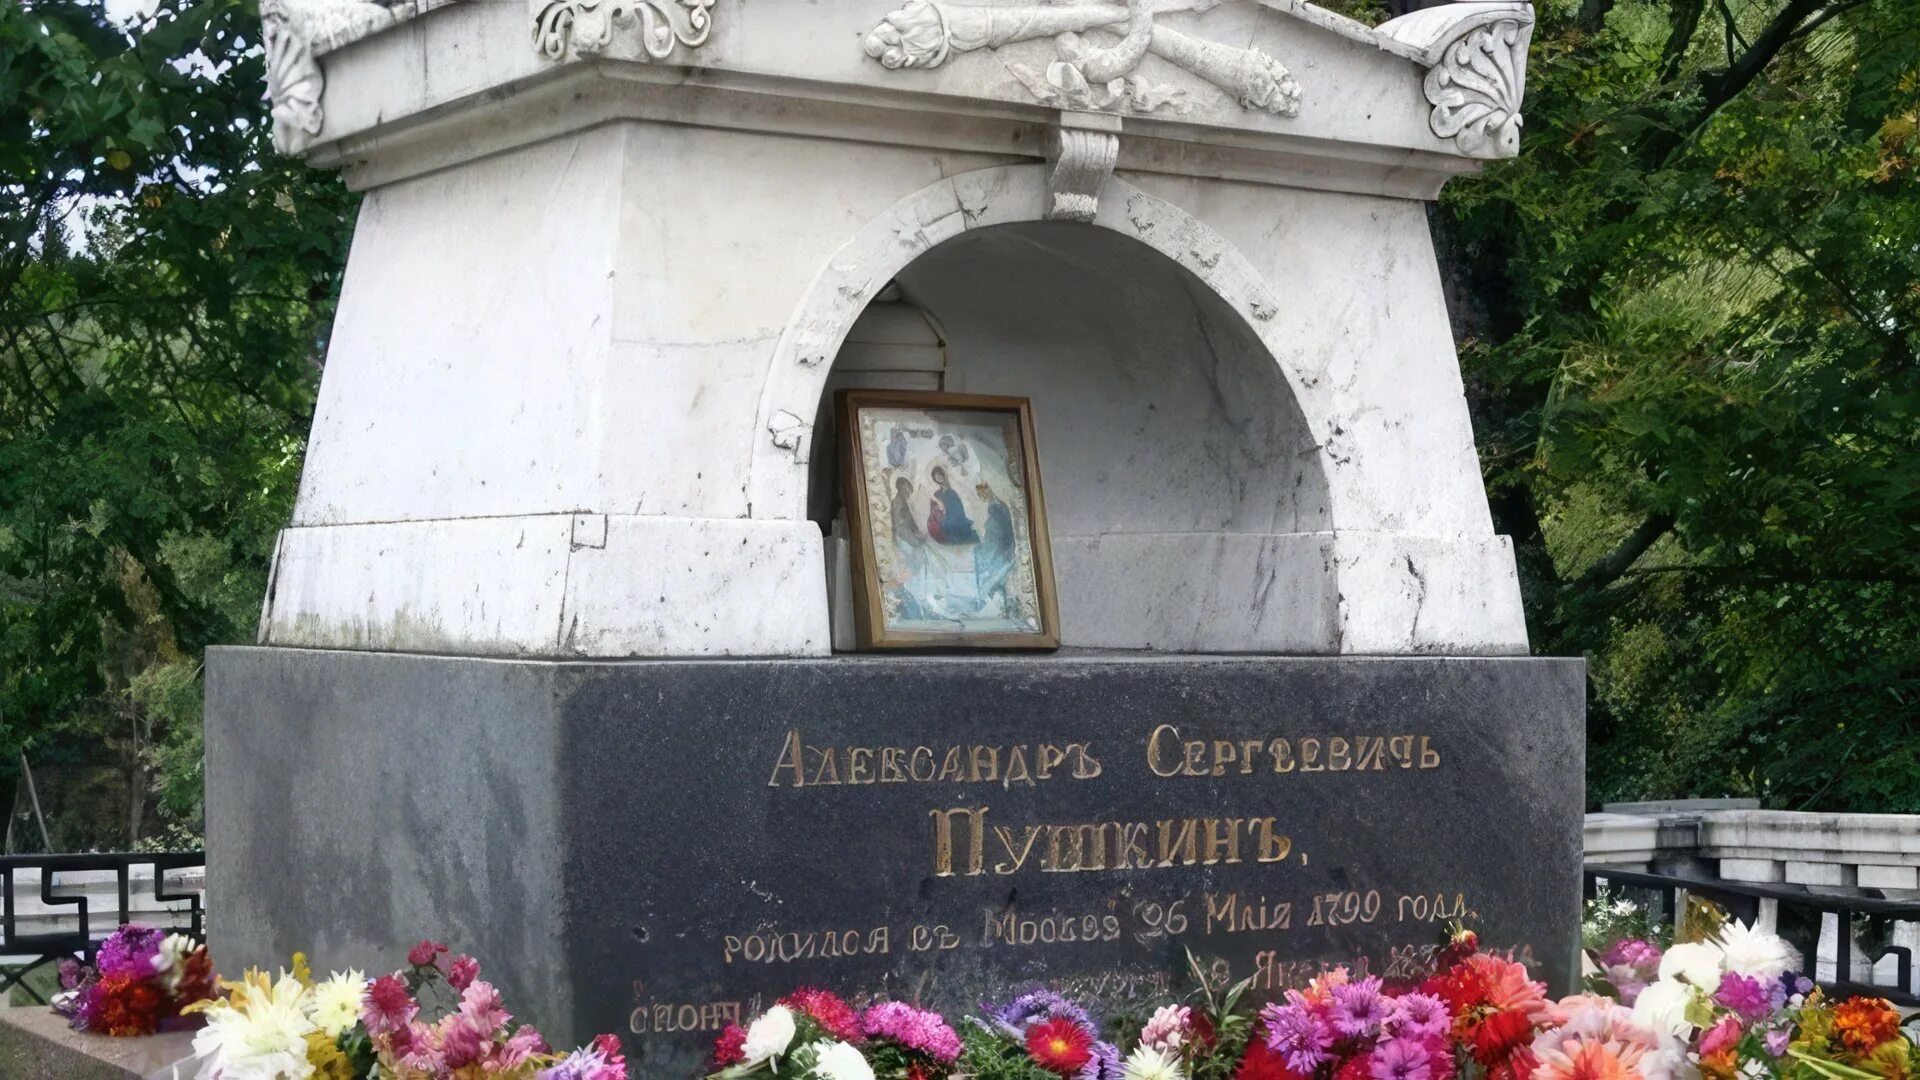 Где кладбище пушкина. Святогорский монастырь могила Пушкина. Могила Пушкина в Святогорском. Пушкин похоронен в Святогорском монастыре.